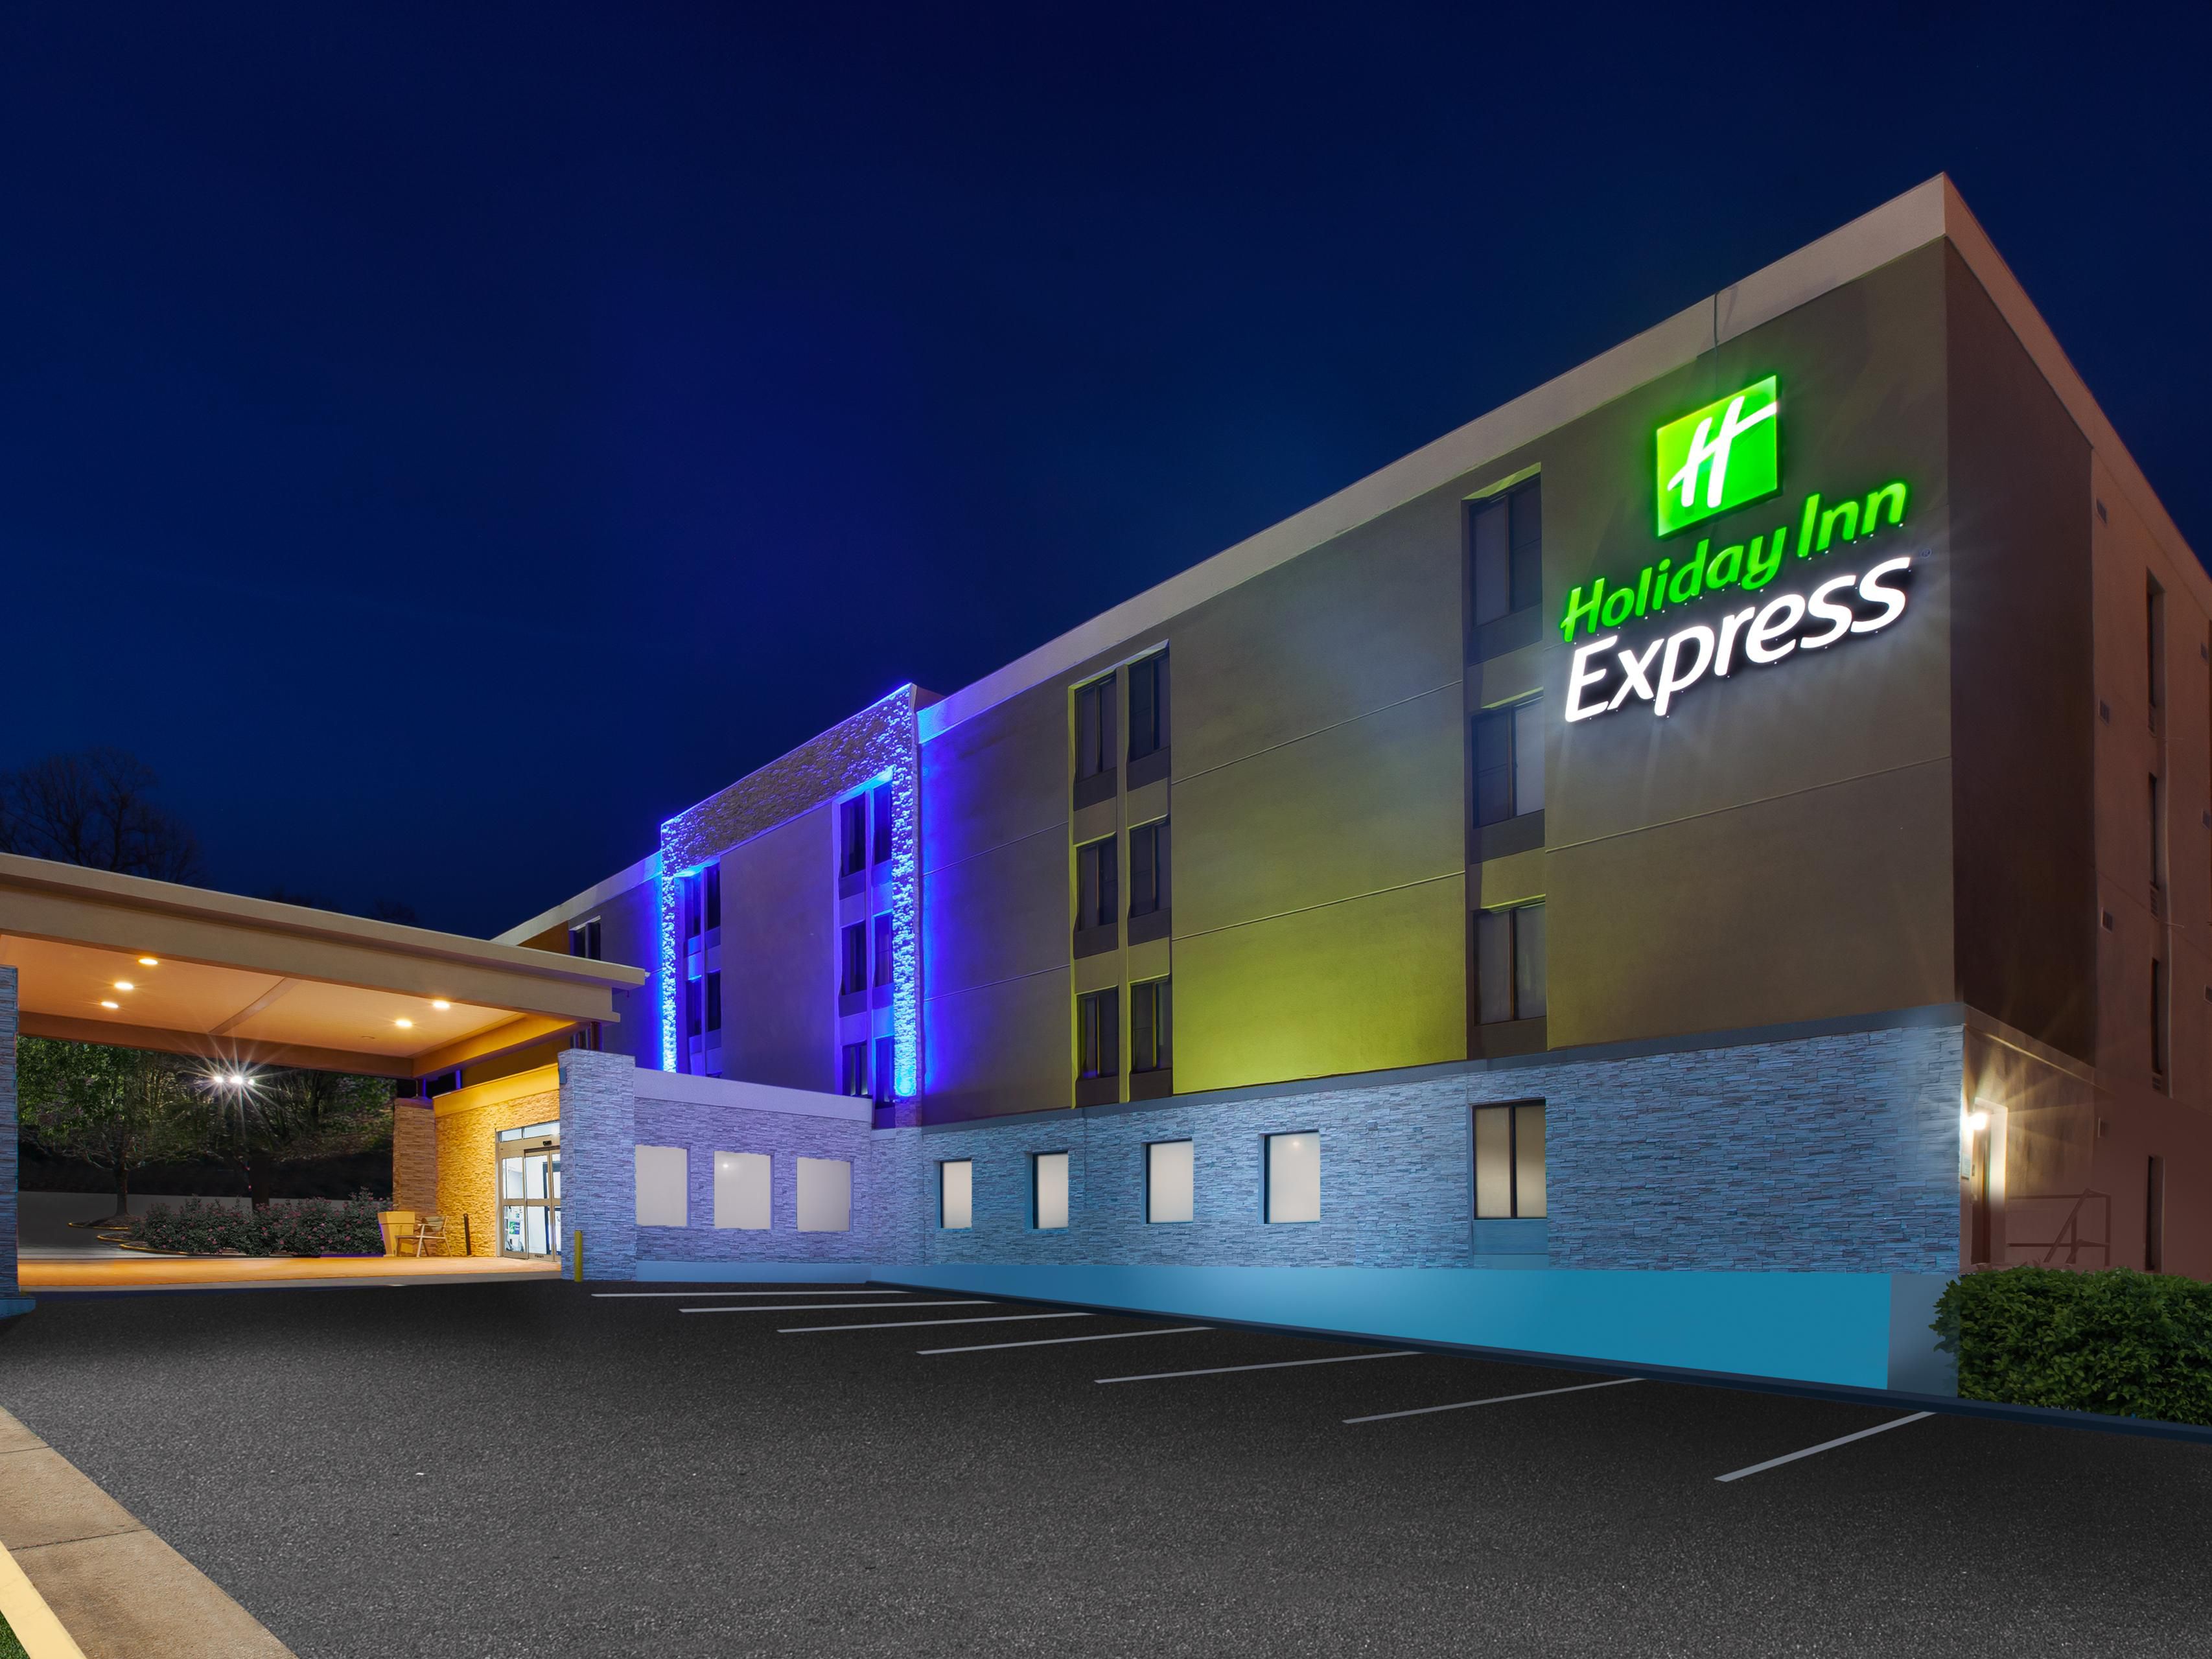 Holiday Inn Express Fairfax 7703035570 4x3